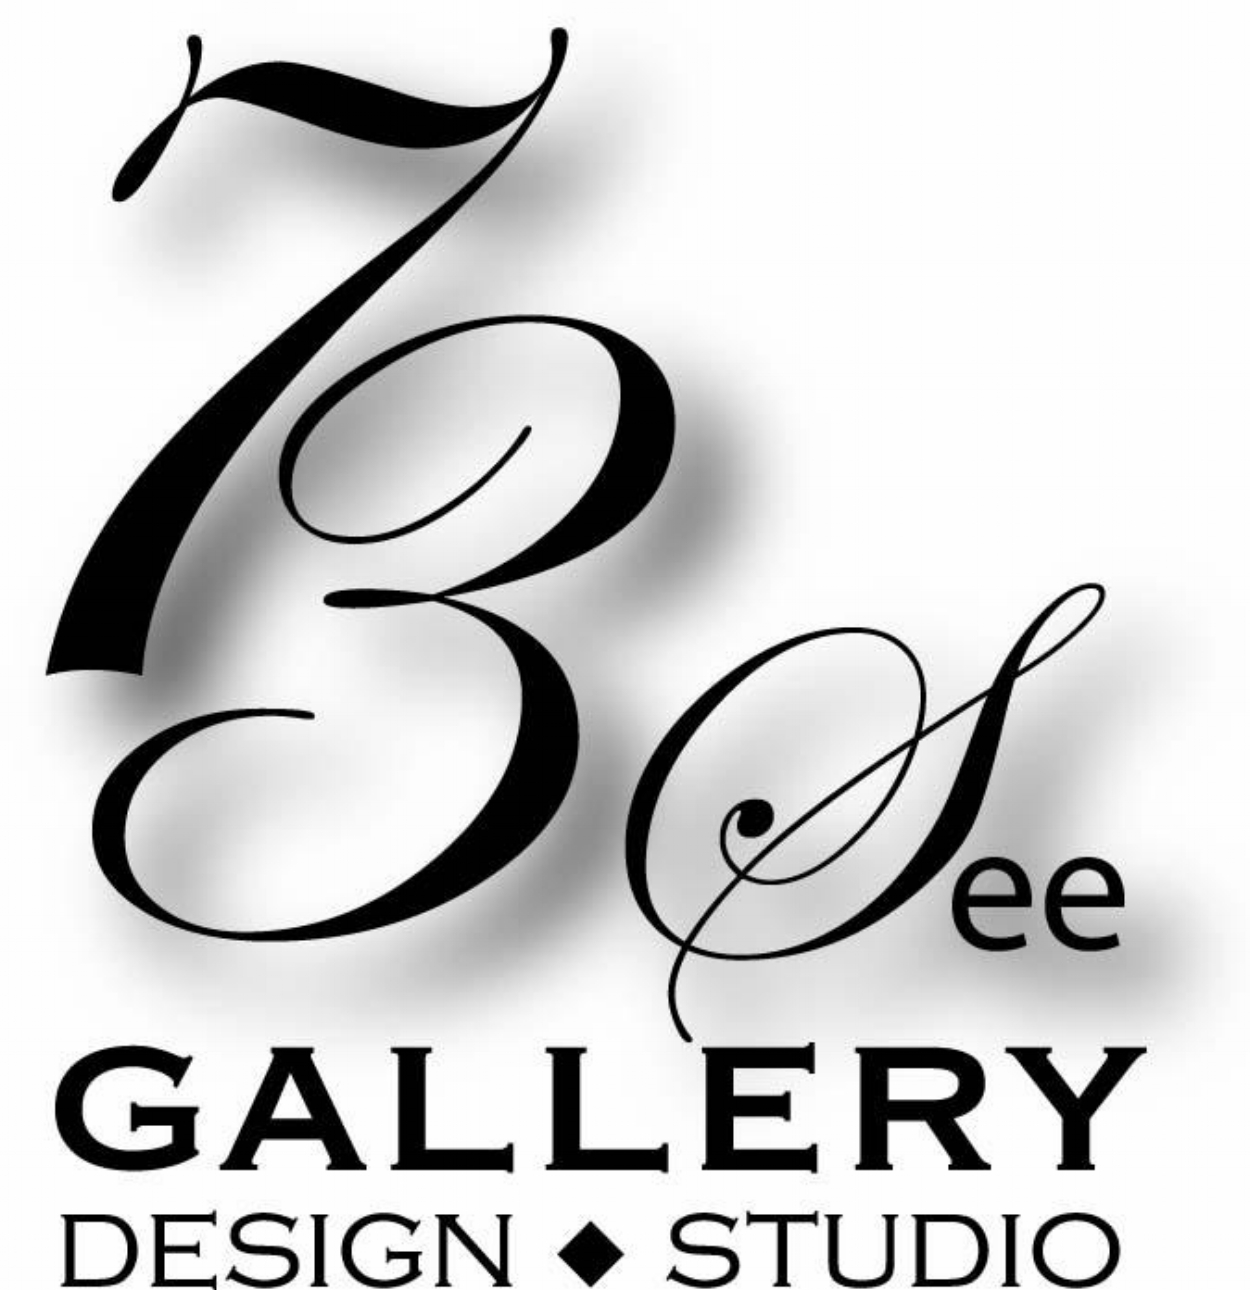 73 See Gallery & Design Studio